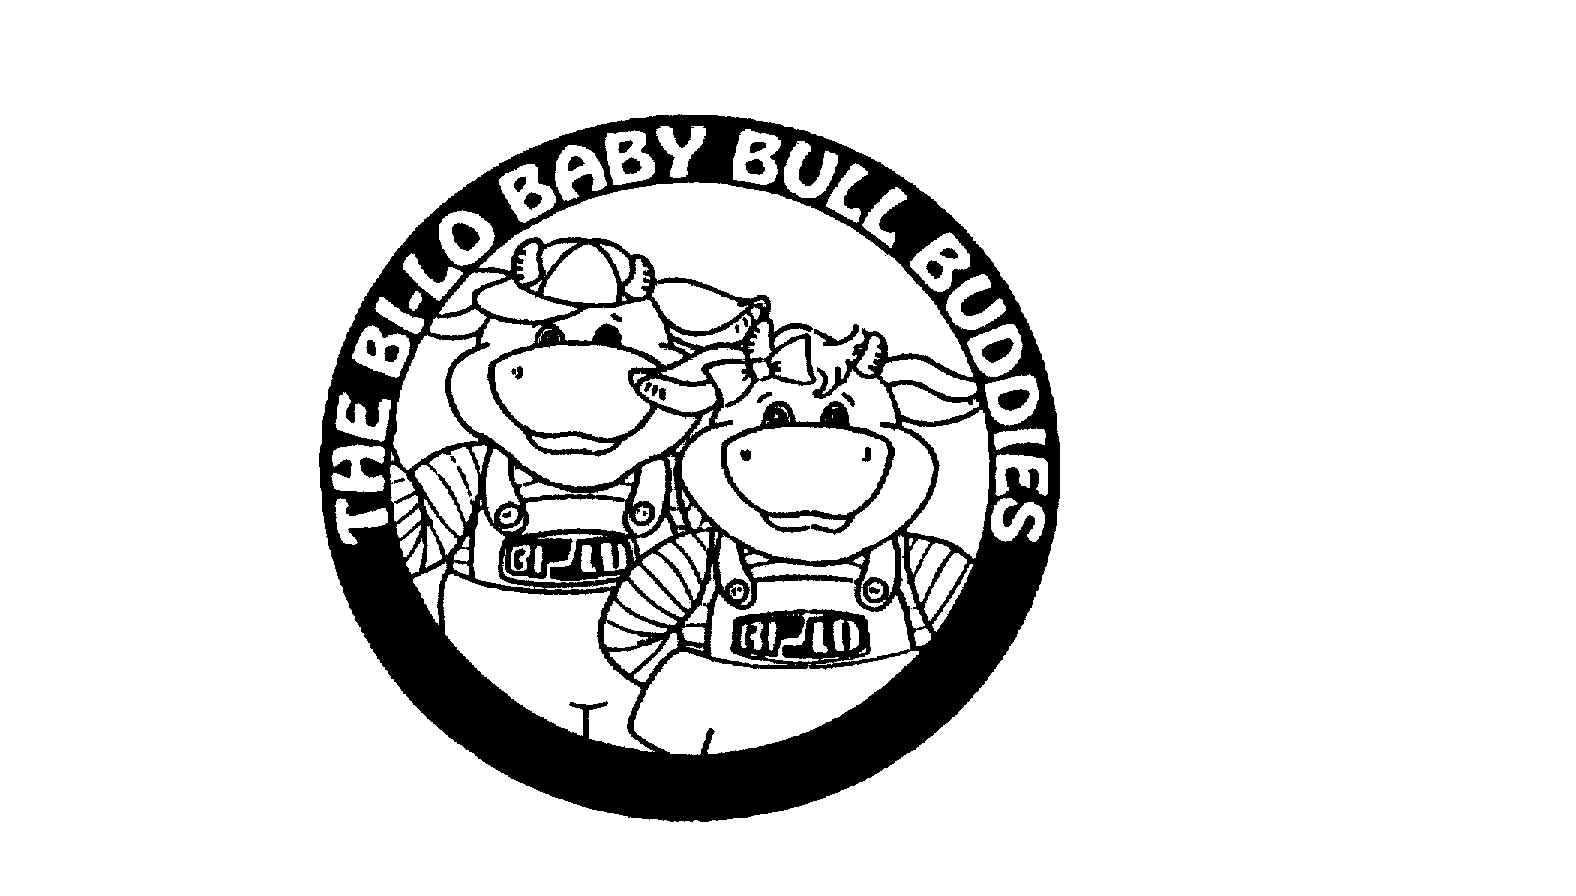  THE BI-LO BABY BULL BUDDIES